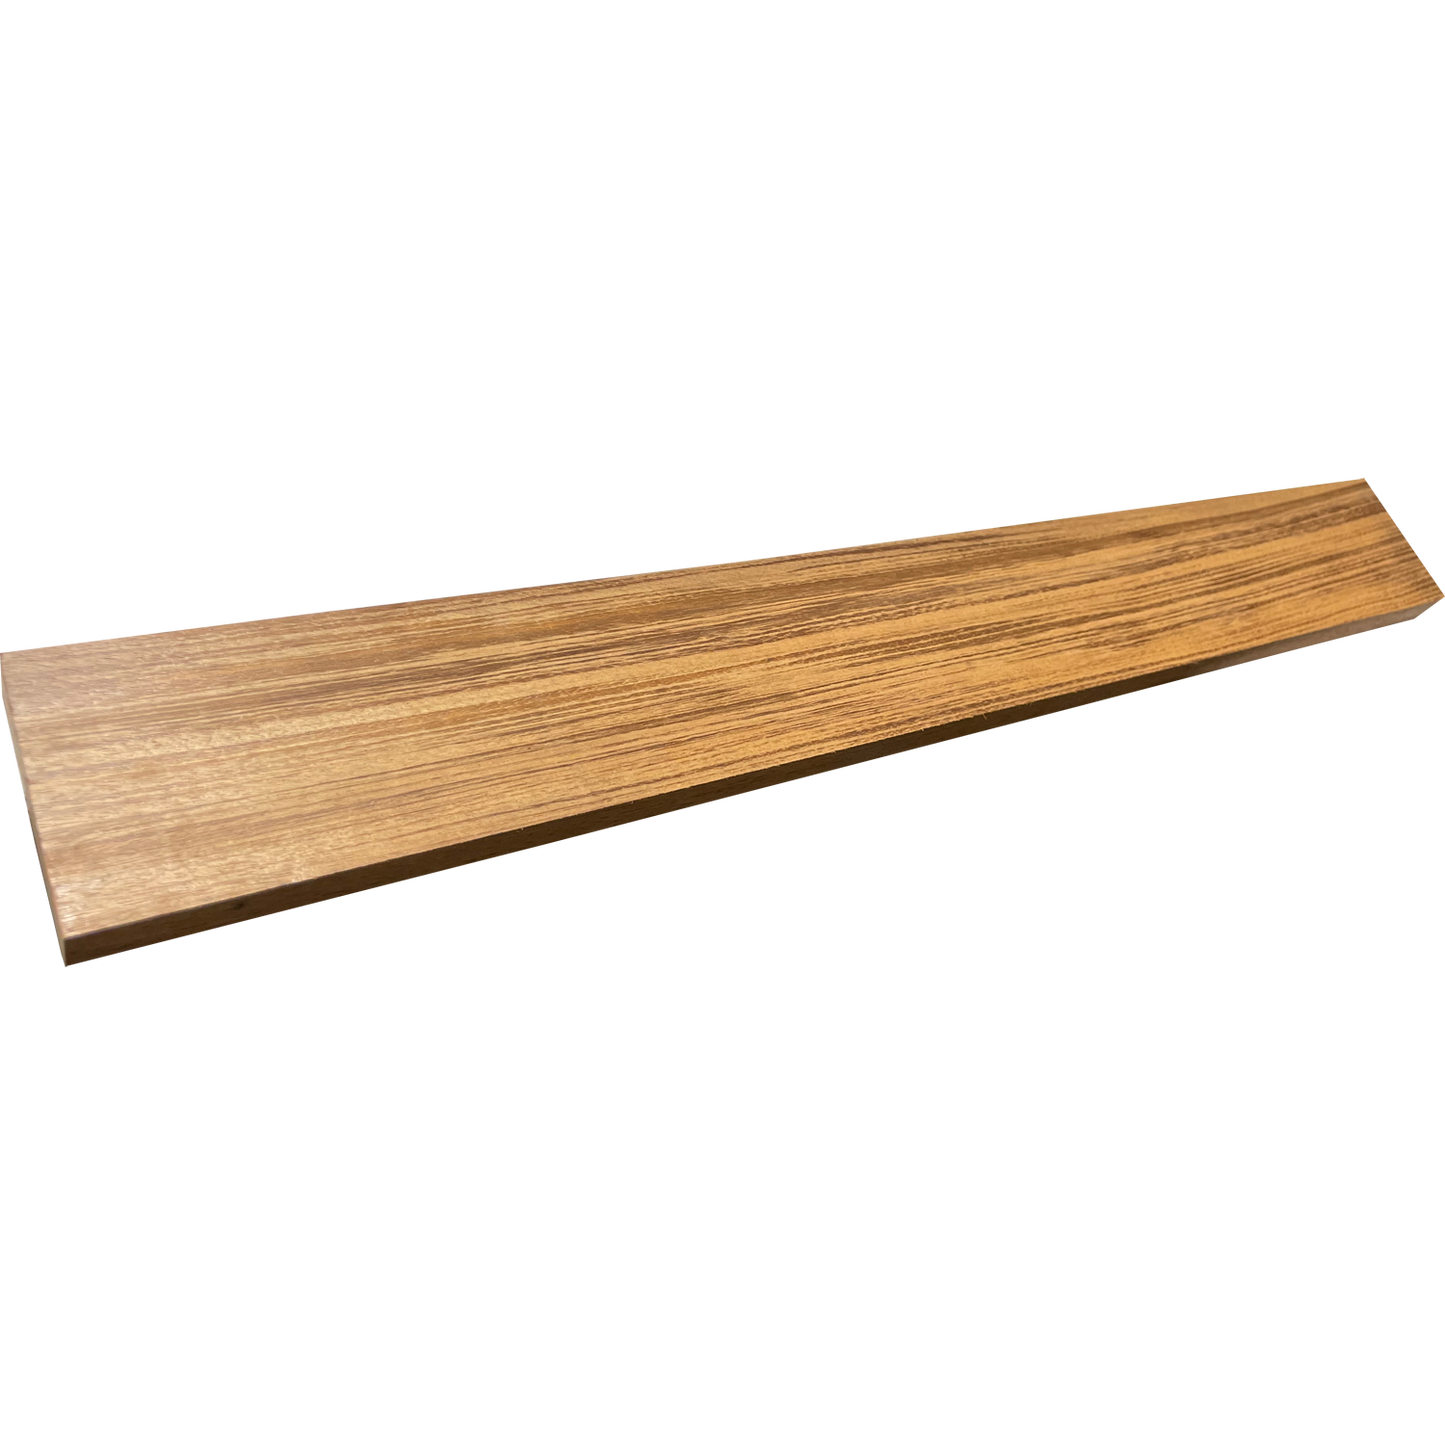 Hububalli - Dimensional Lumber